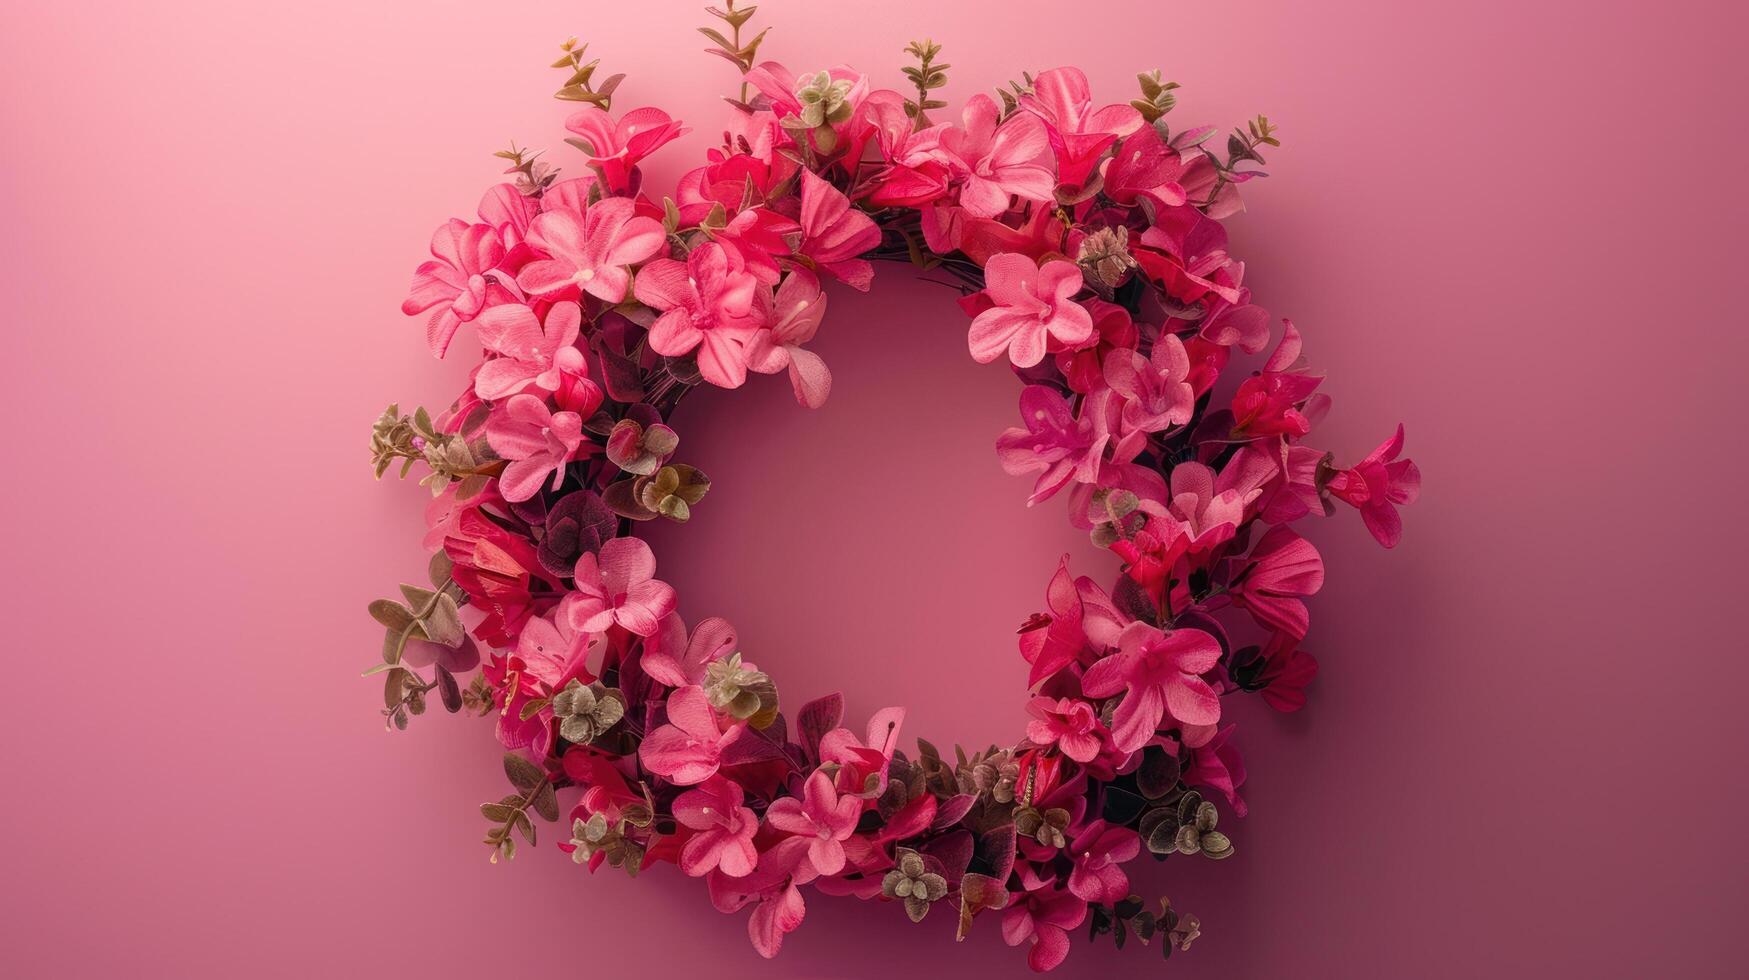 AI generated Flower Arrangement. Pink flower wreath against a pink backdrop photo